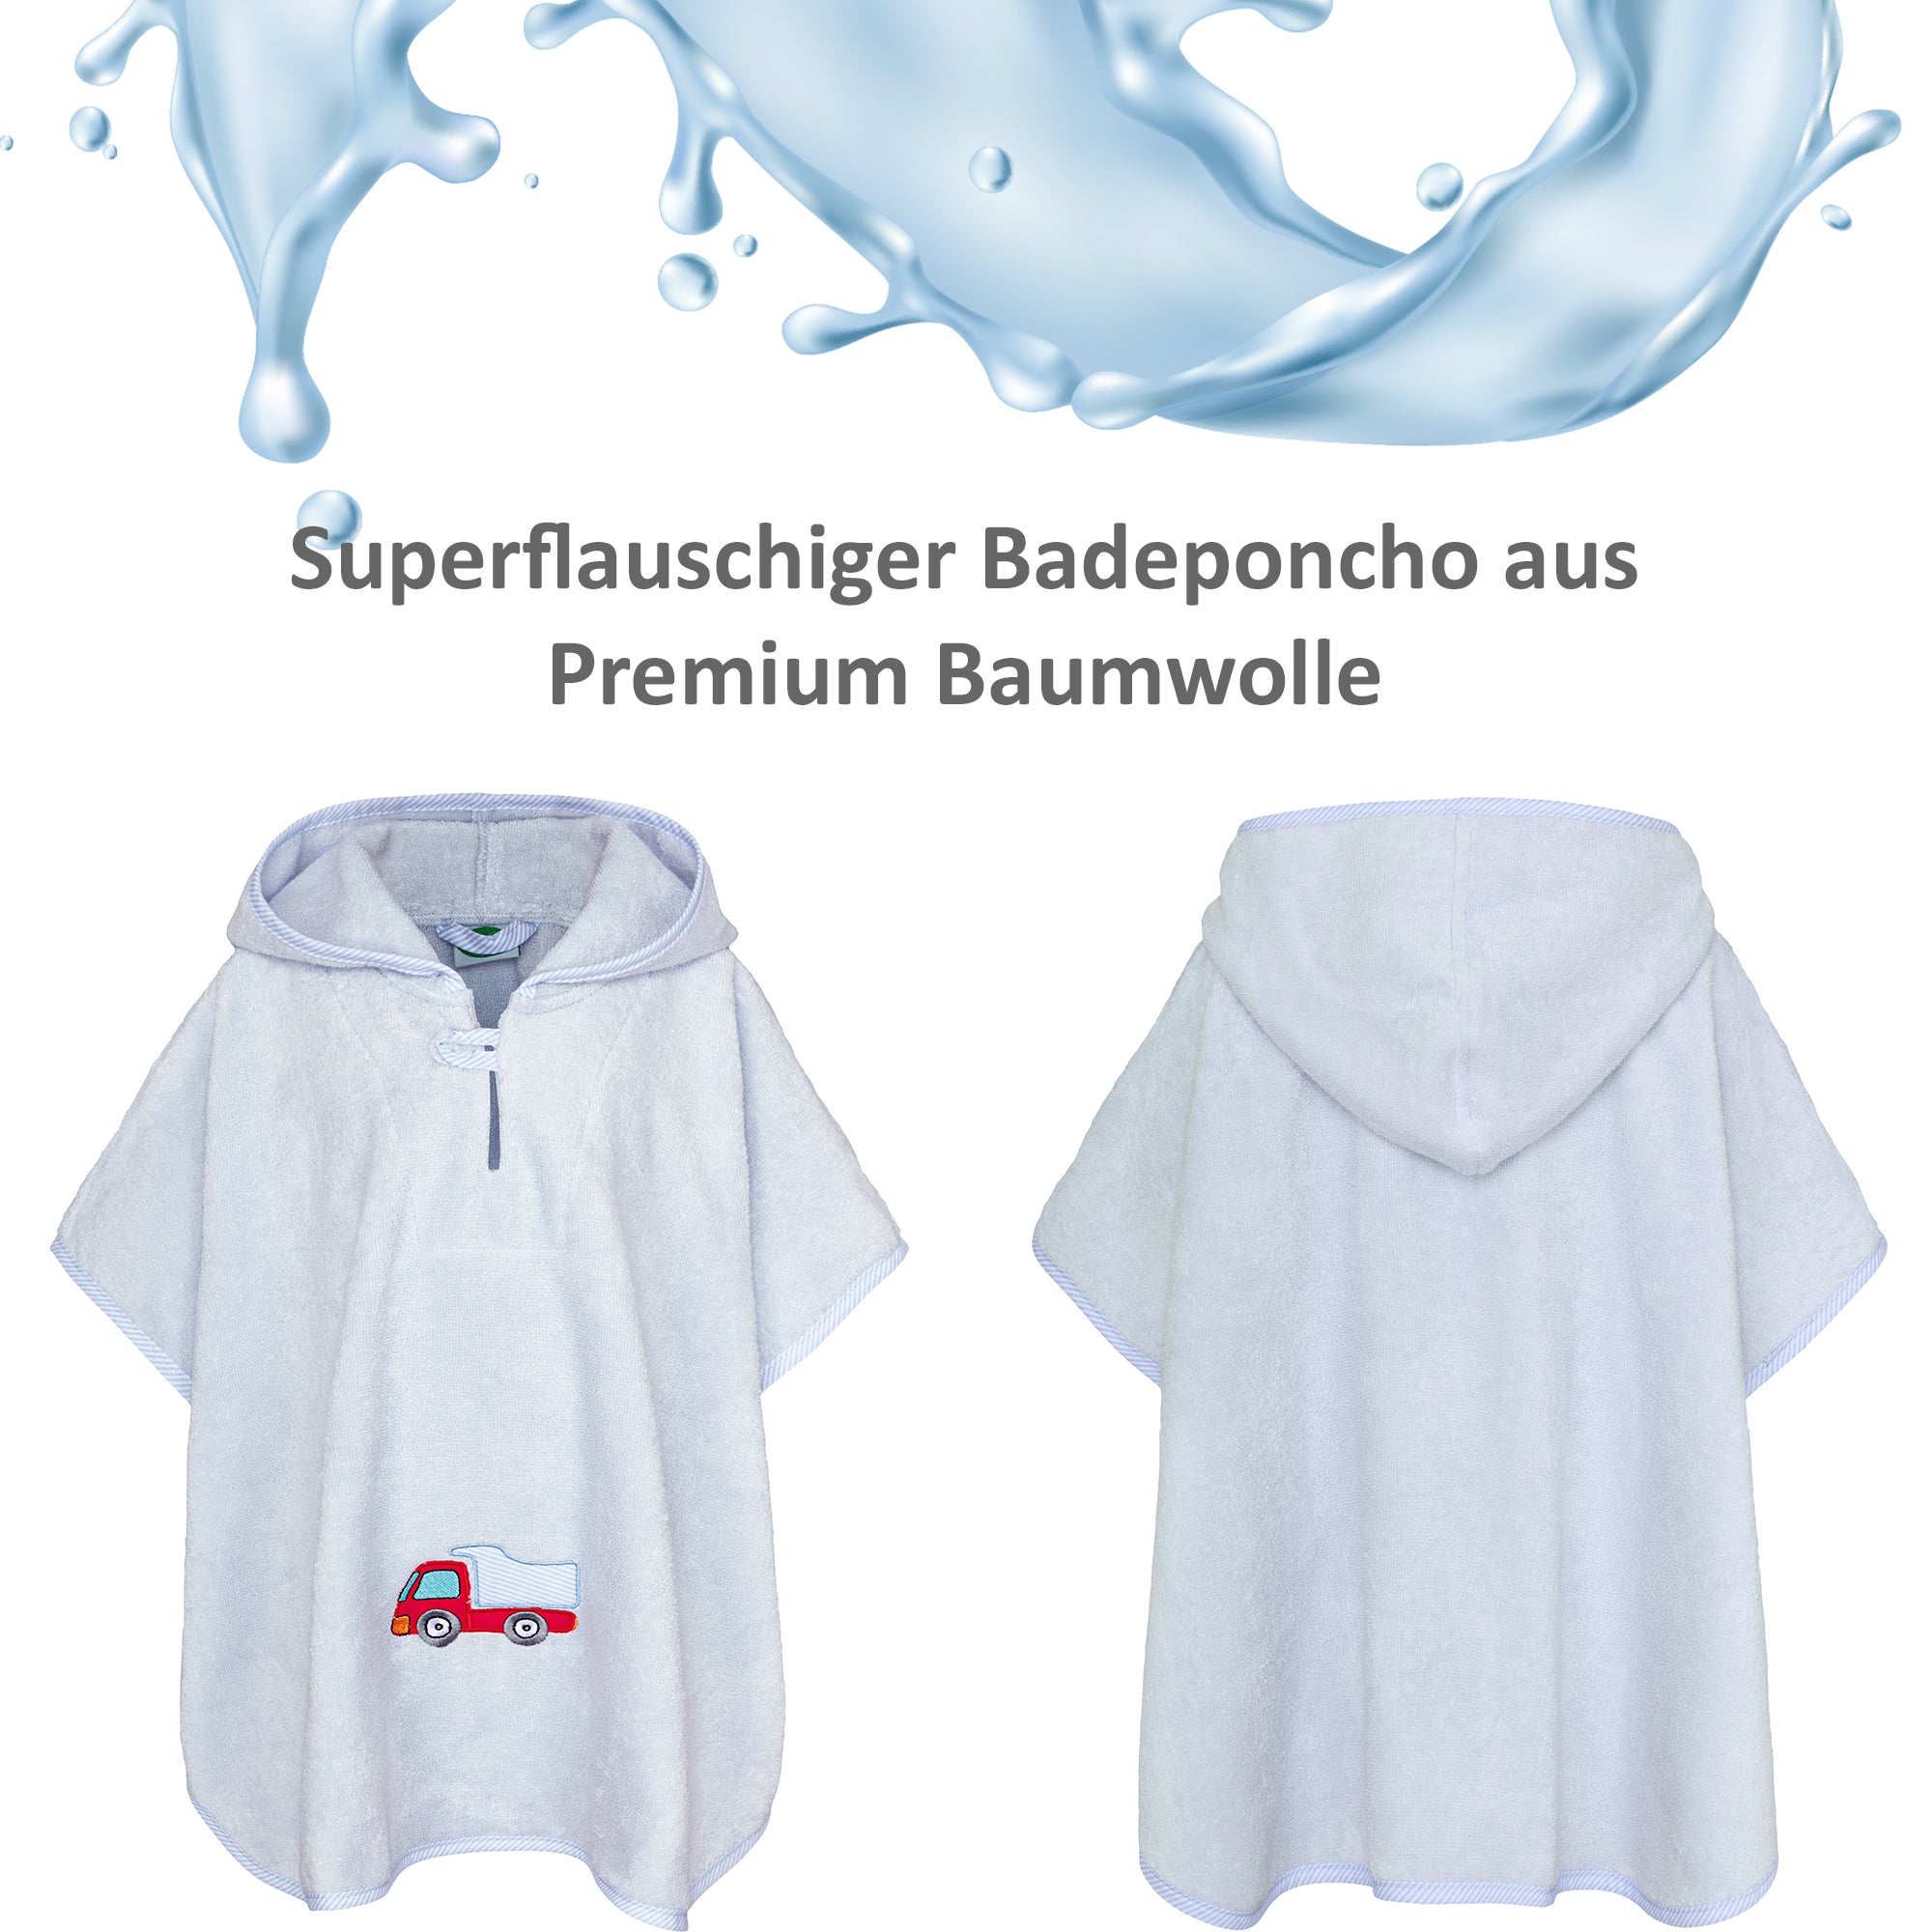 Badeponcho Premium Baumwolle, blau